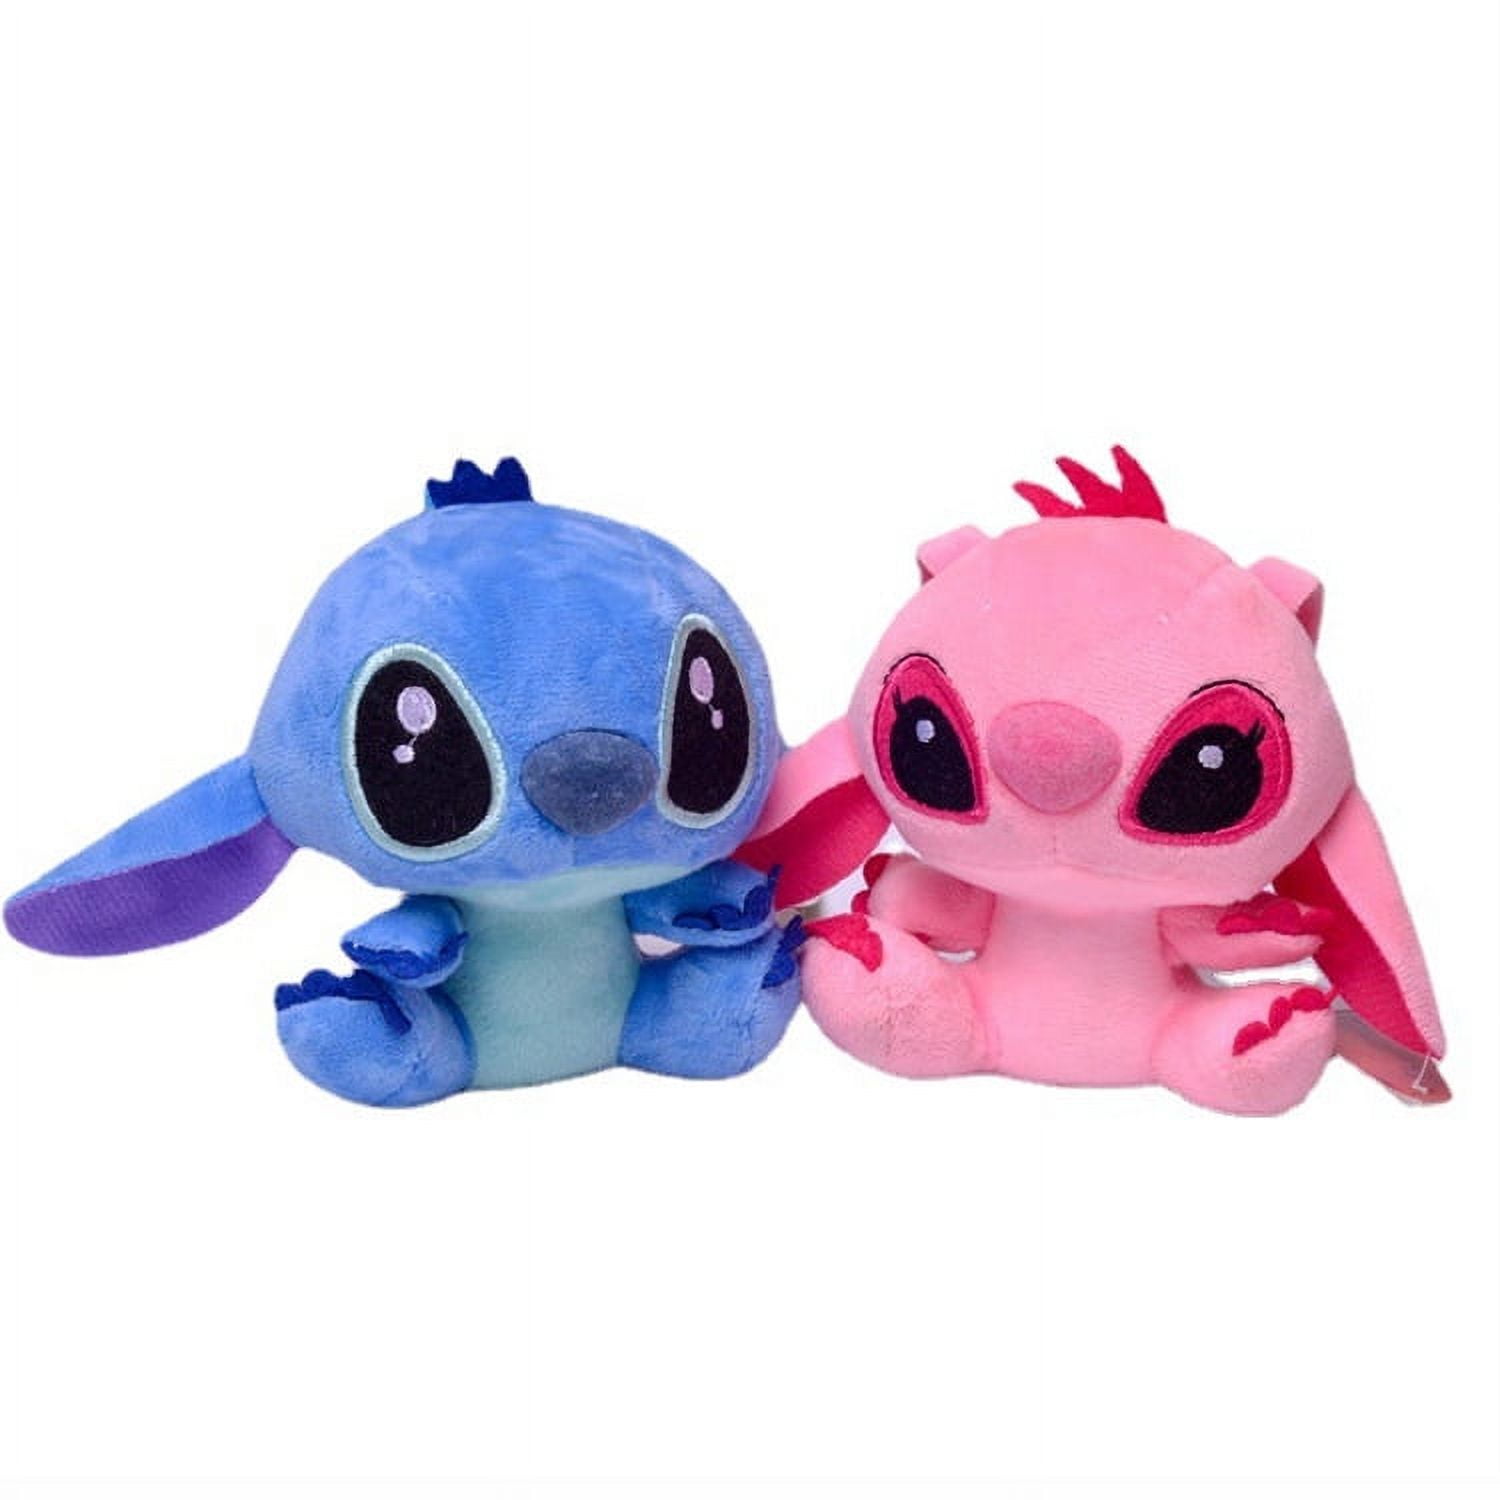 Stitch Plush – Adorable Cute Plushies